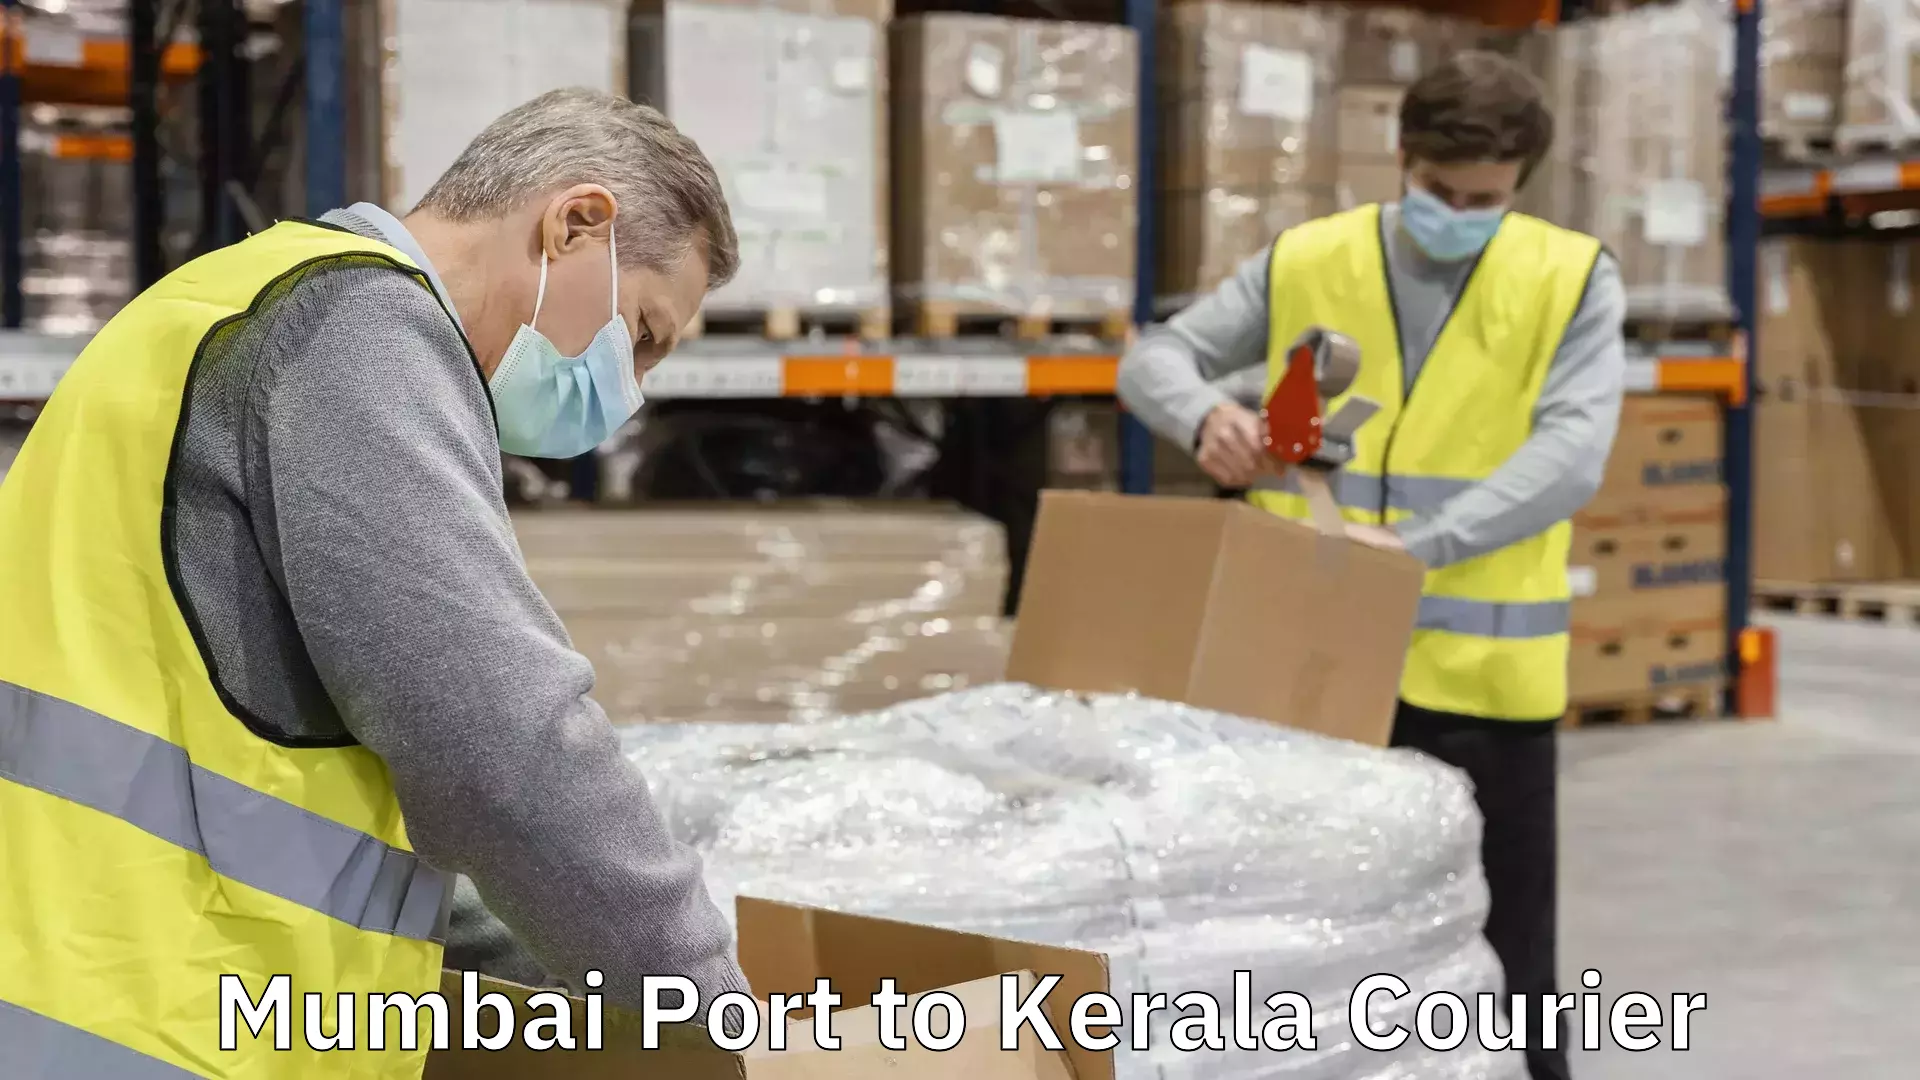 Fast shipping solutions Mumbai Port to Kerala